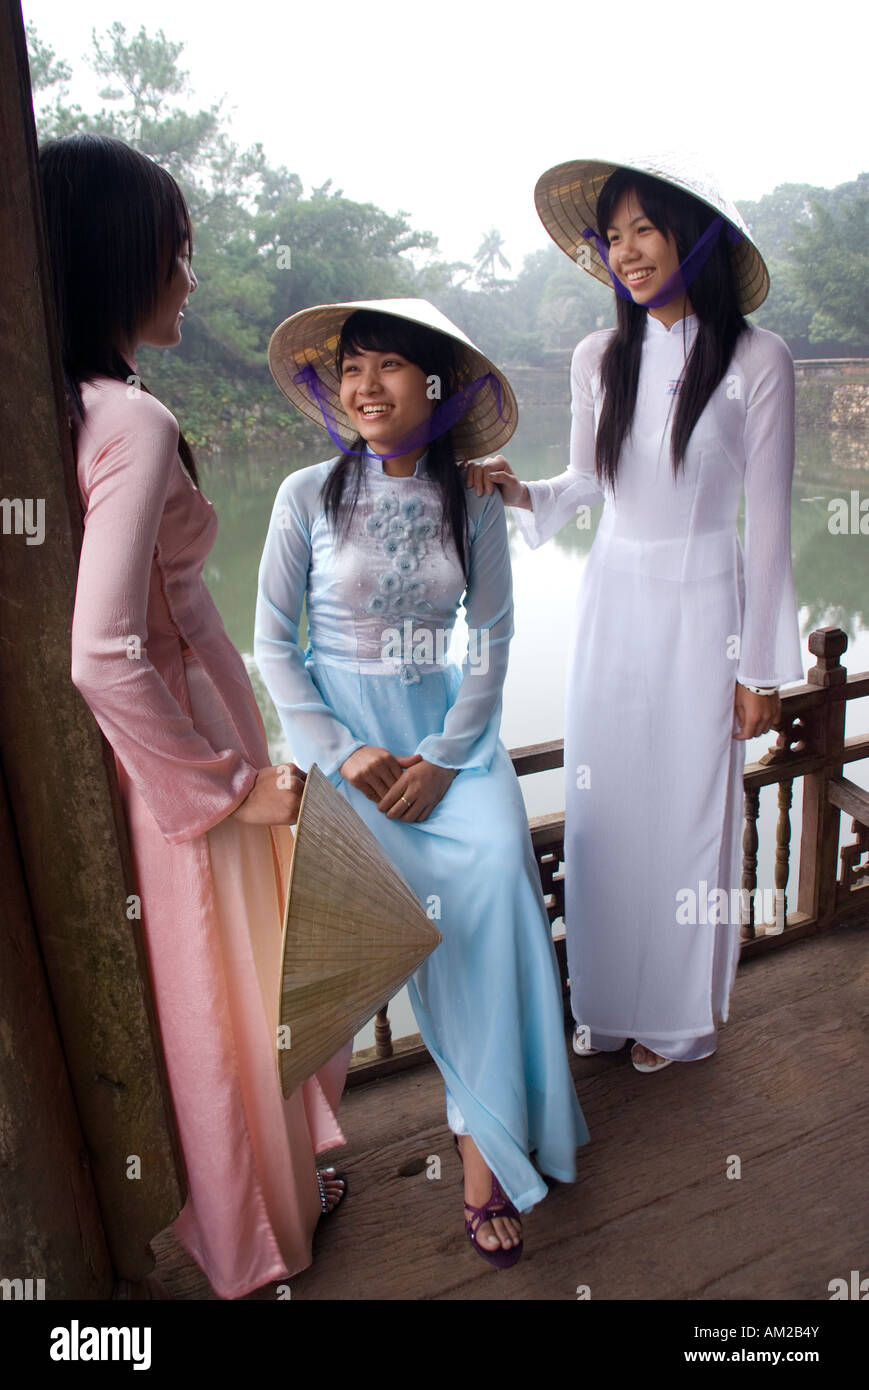 https://c8.alamy.com/comp/AM2B4Y/young-vietnamese-women-wearing-traditional-ao-dai-dresses-at-hues-AM2B4Y.jpg